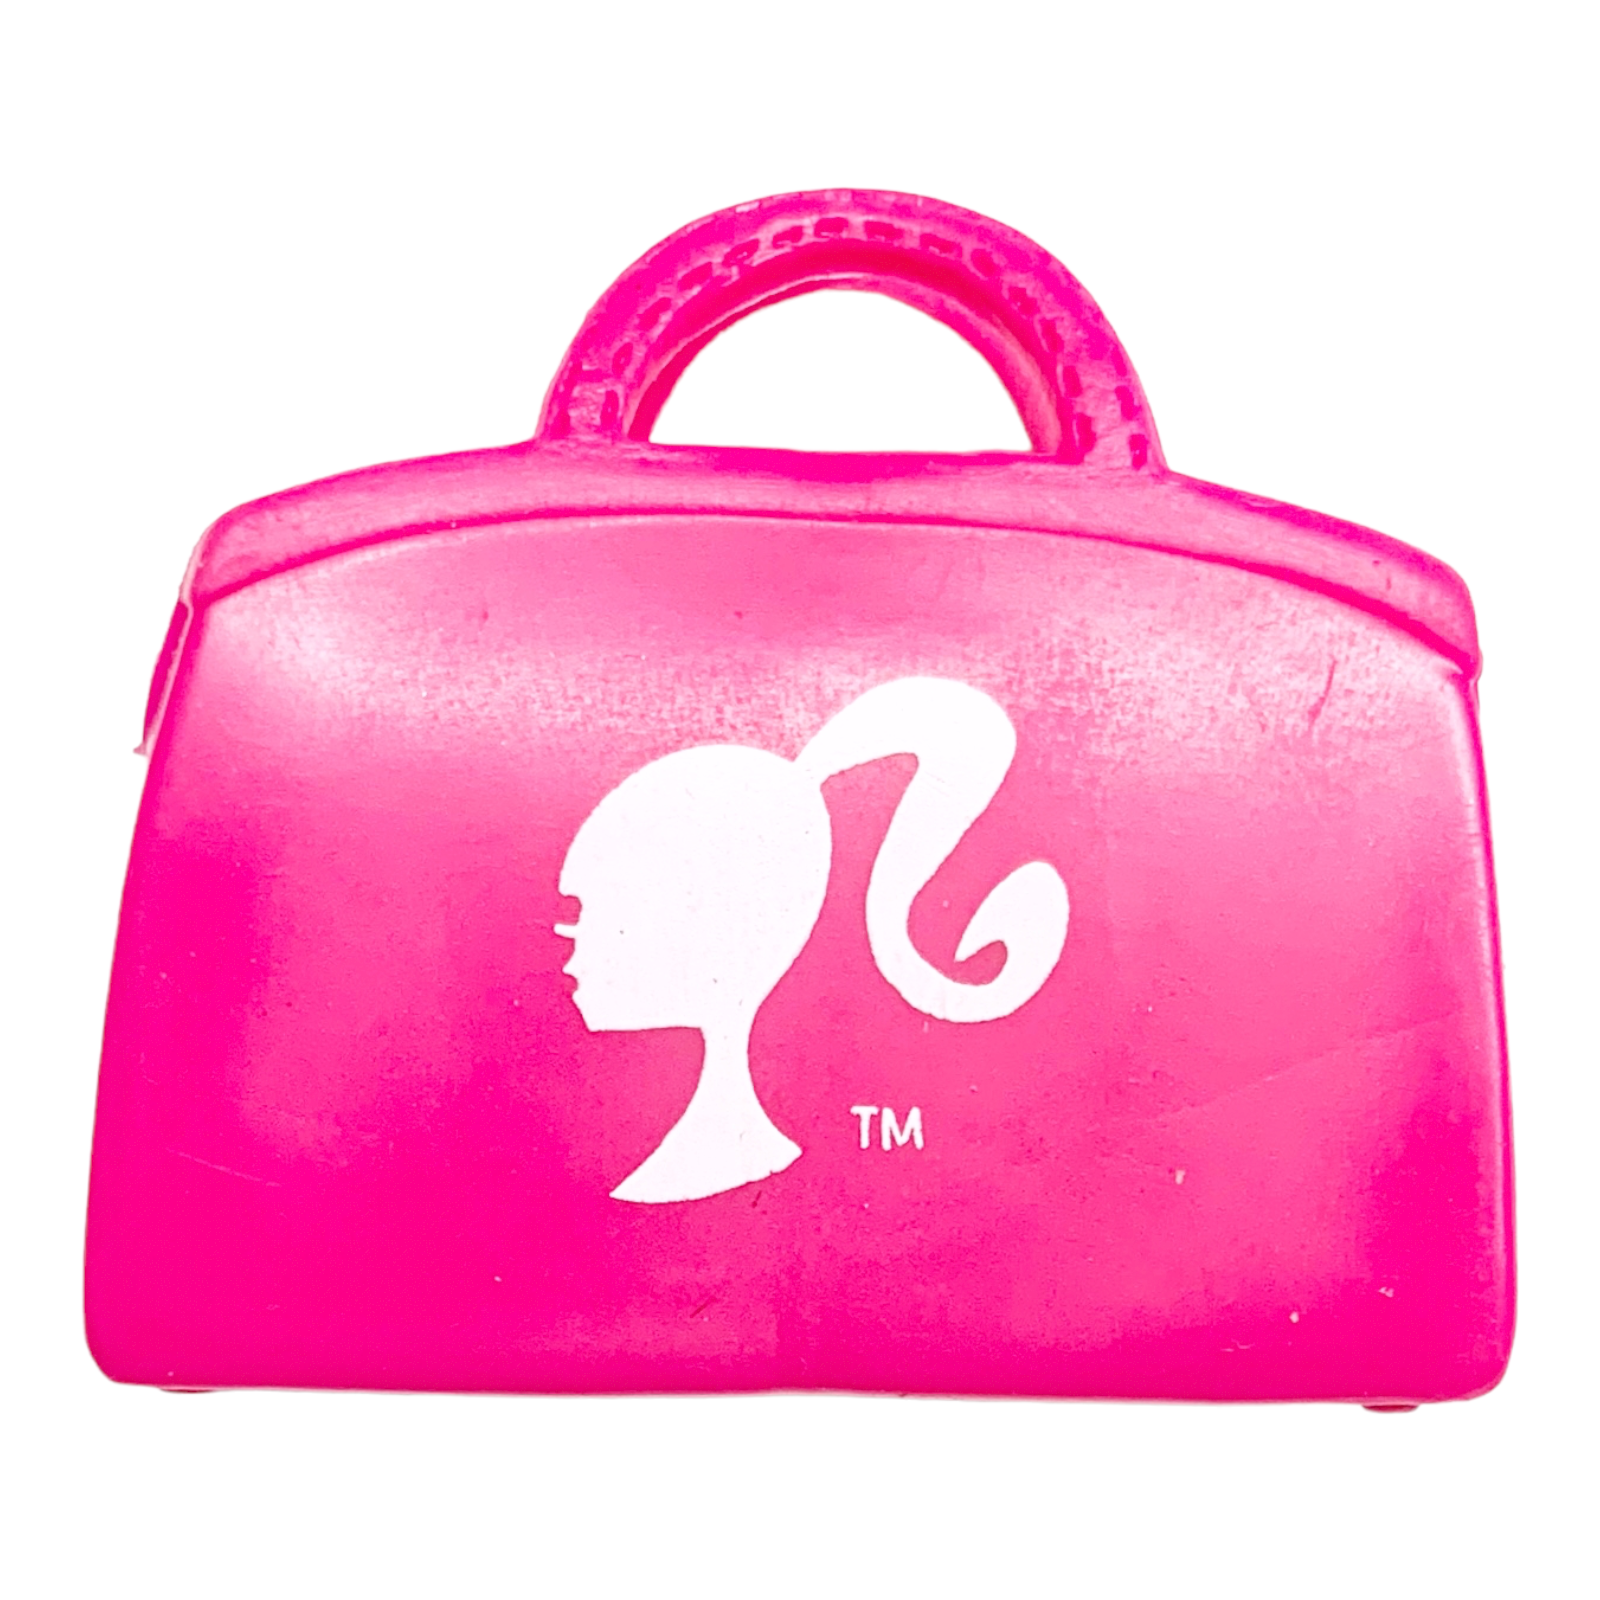 Barbi Doll Accessories Shoes | Bag |Purse| Shoulder Bag| Hanger for Dolls  (Multicolor) (Set of 1) : Amazon.in: Toys & Games